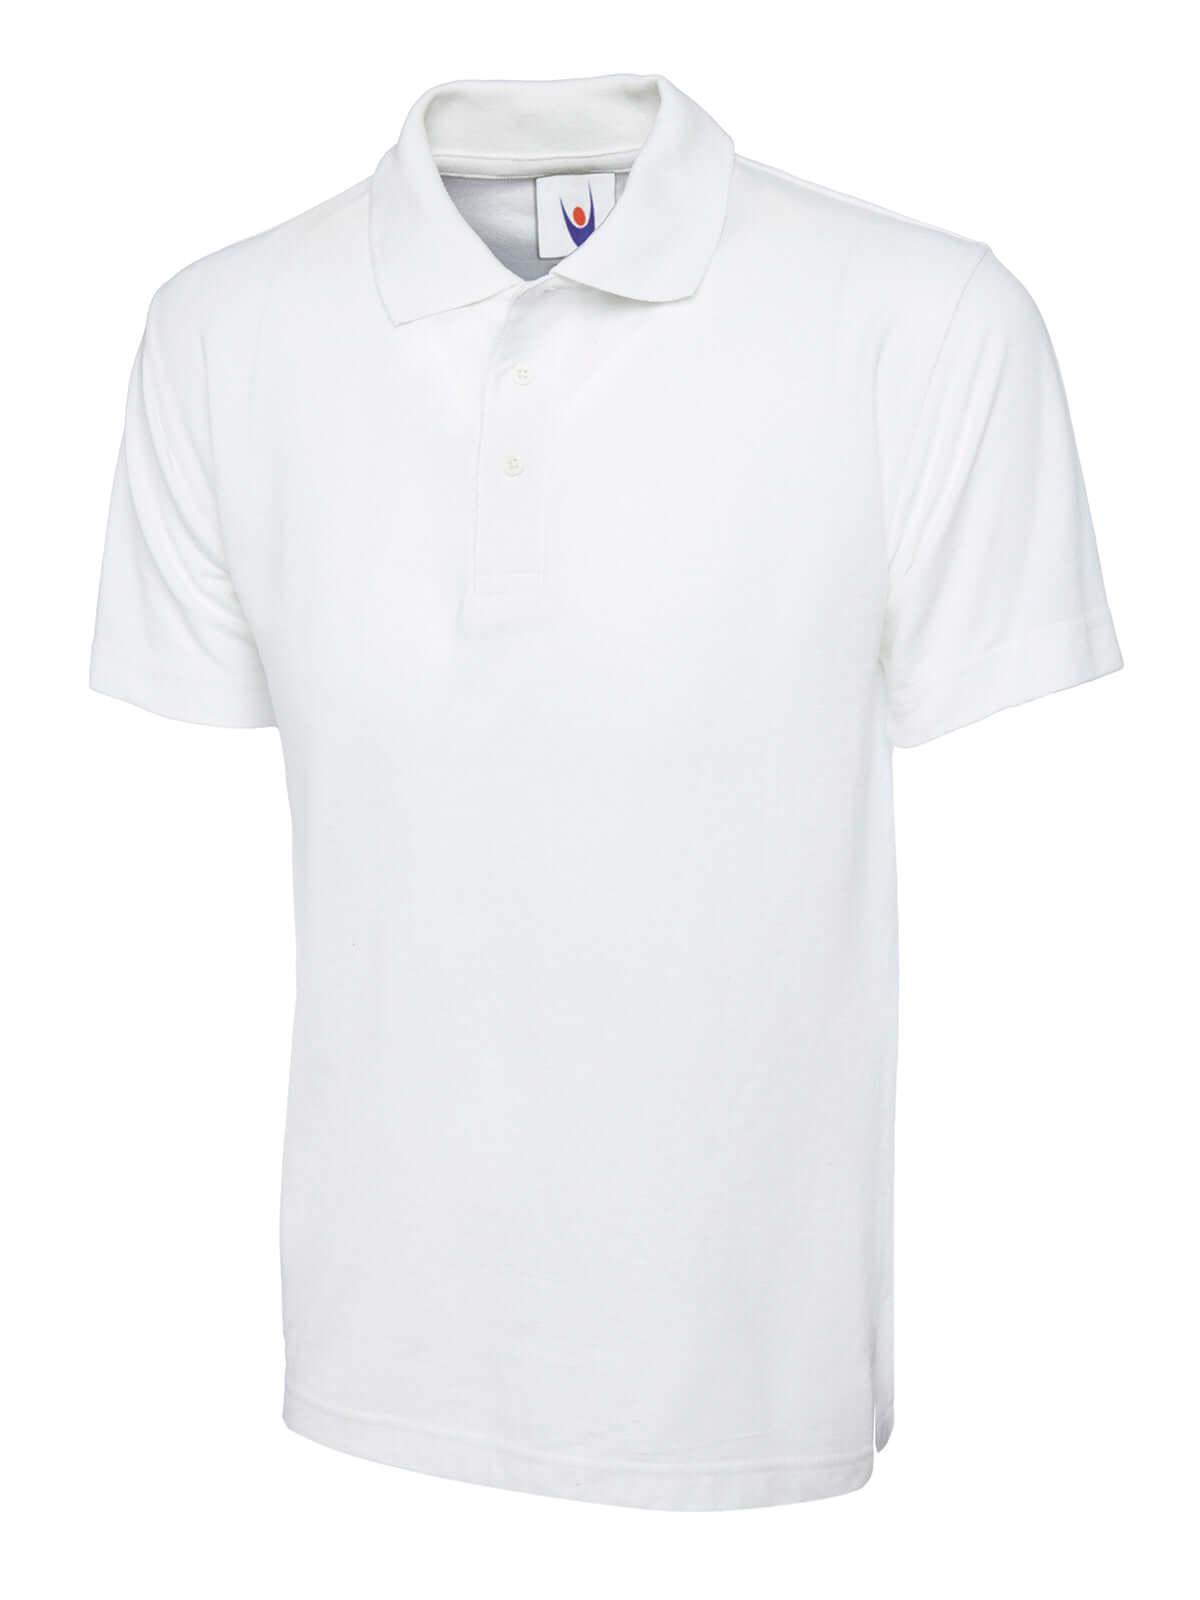 Pegasus Uniform Classic Unisex Polo Shirt - White